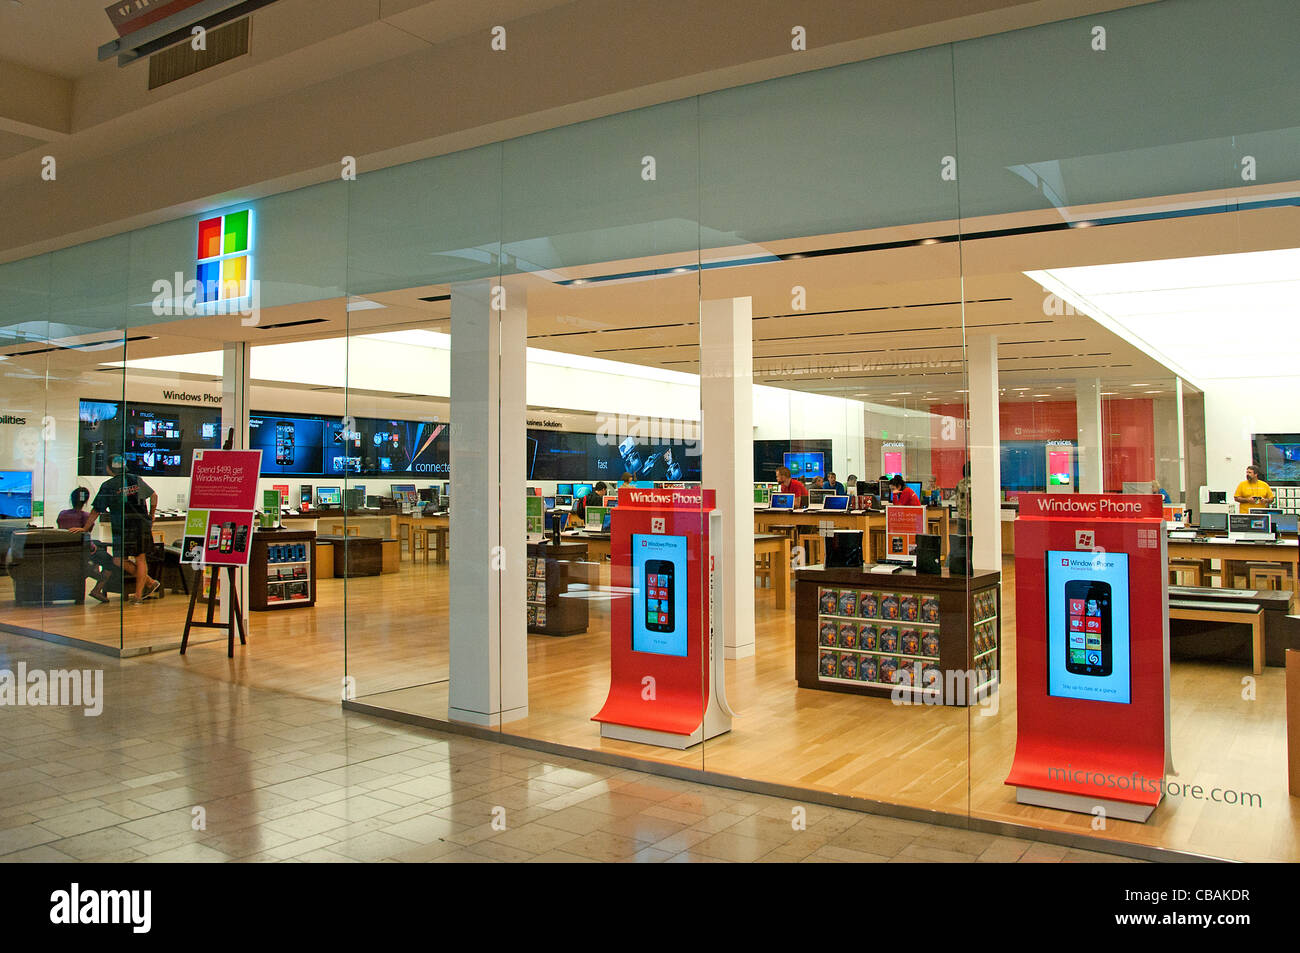 Microsoft Windows Phone shopping mall shop store téléphone ordinateur United States Banque D'Images